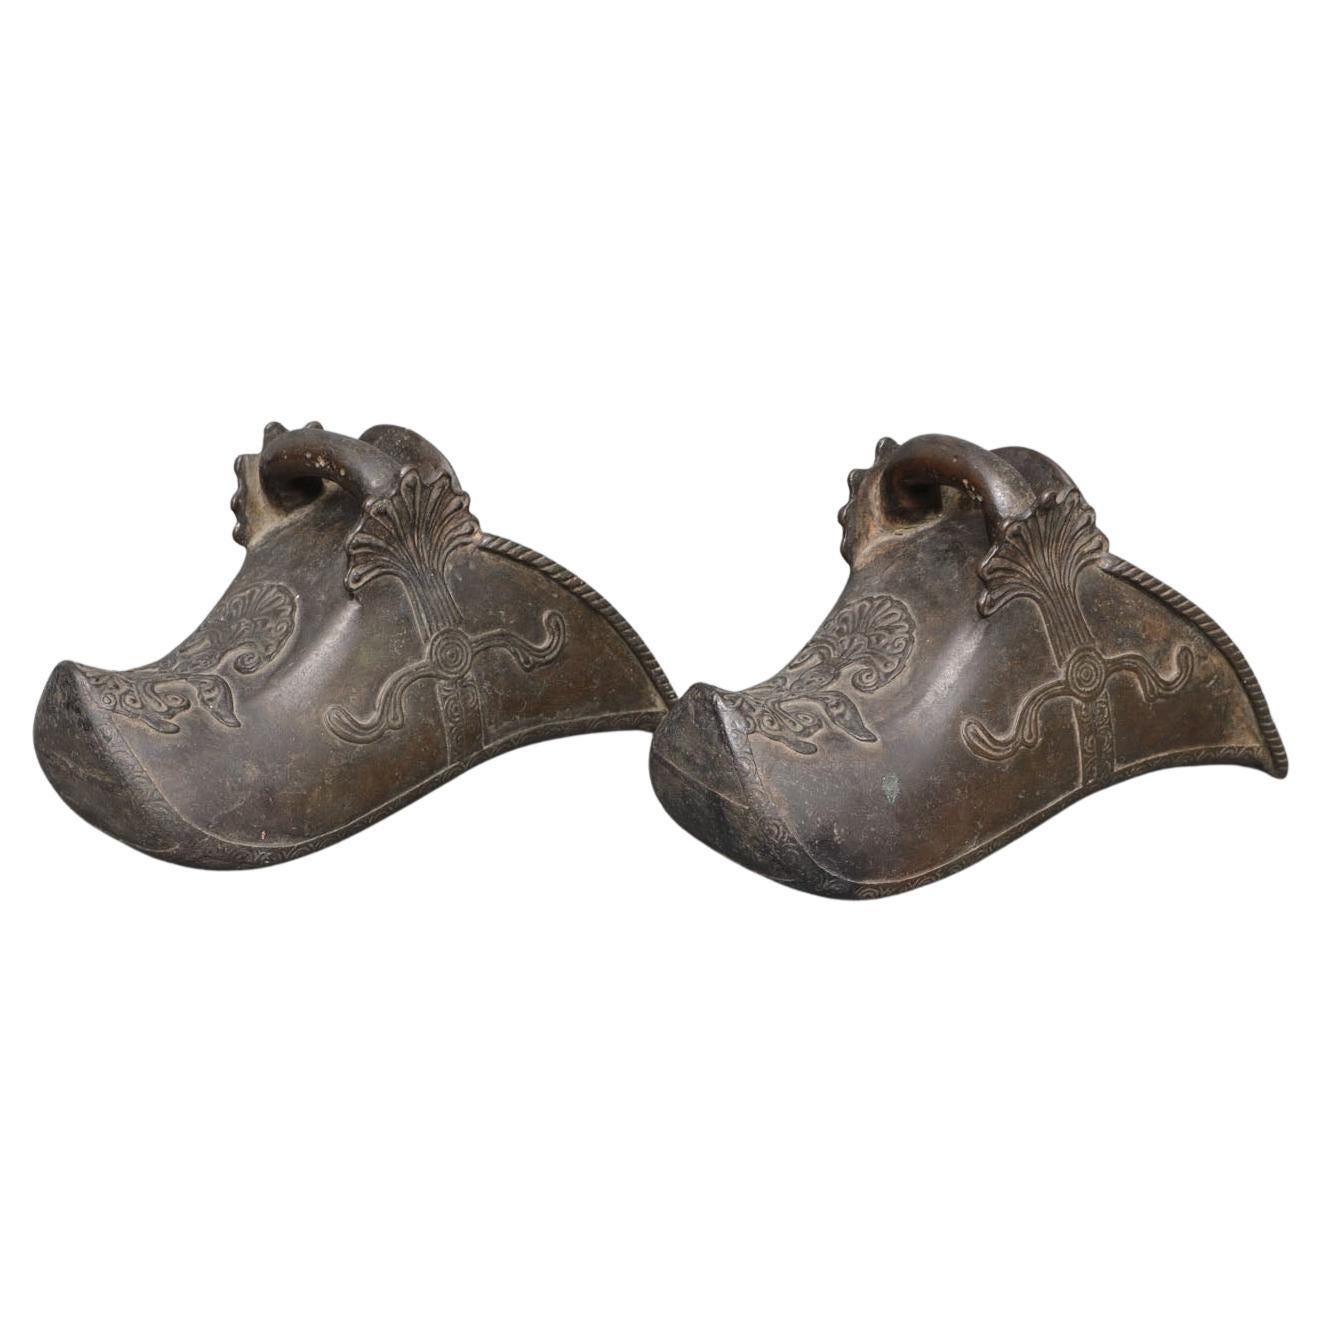 Pair of Bronze “Shoe-Shape" Conquistador Horse Stirrups with Low Relief Design